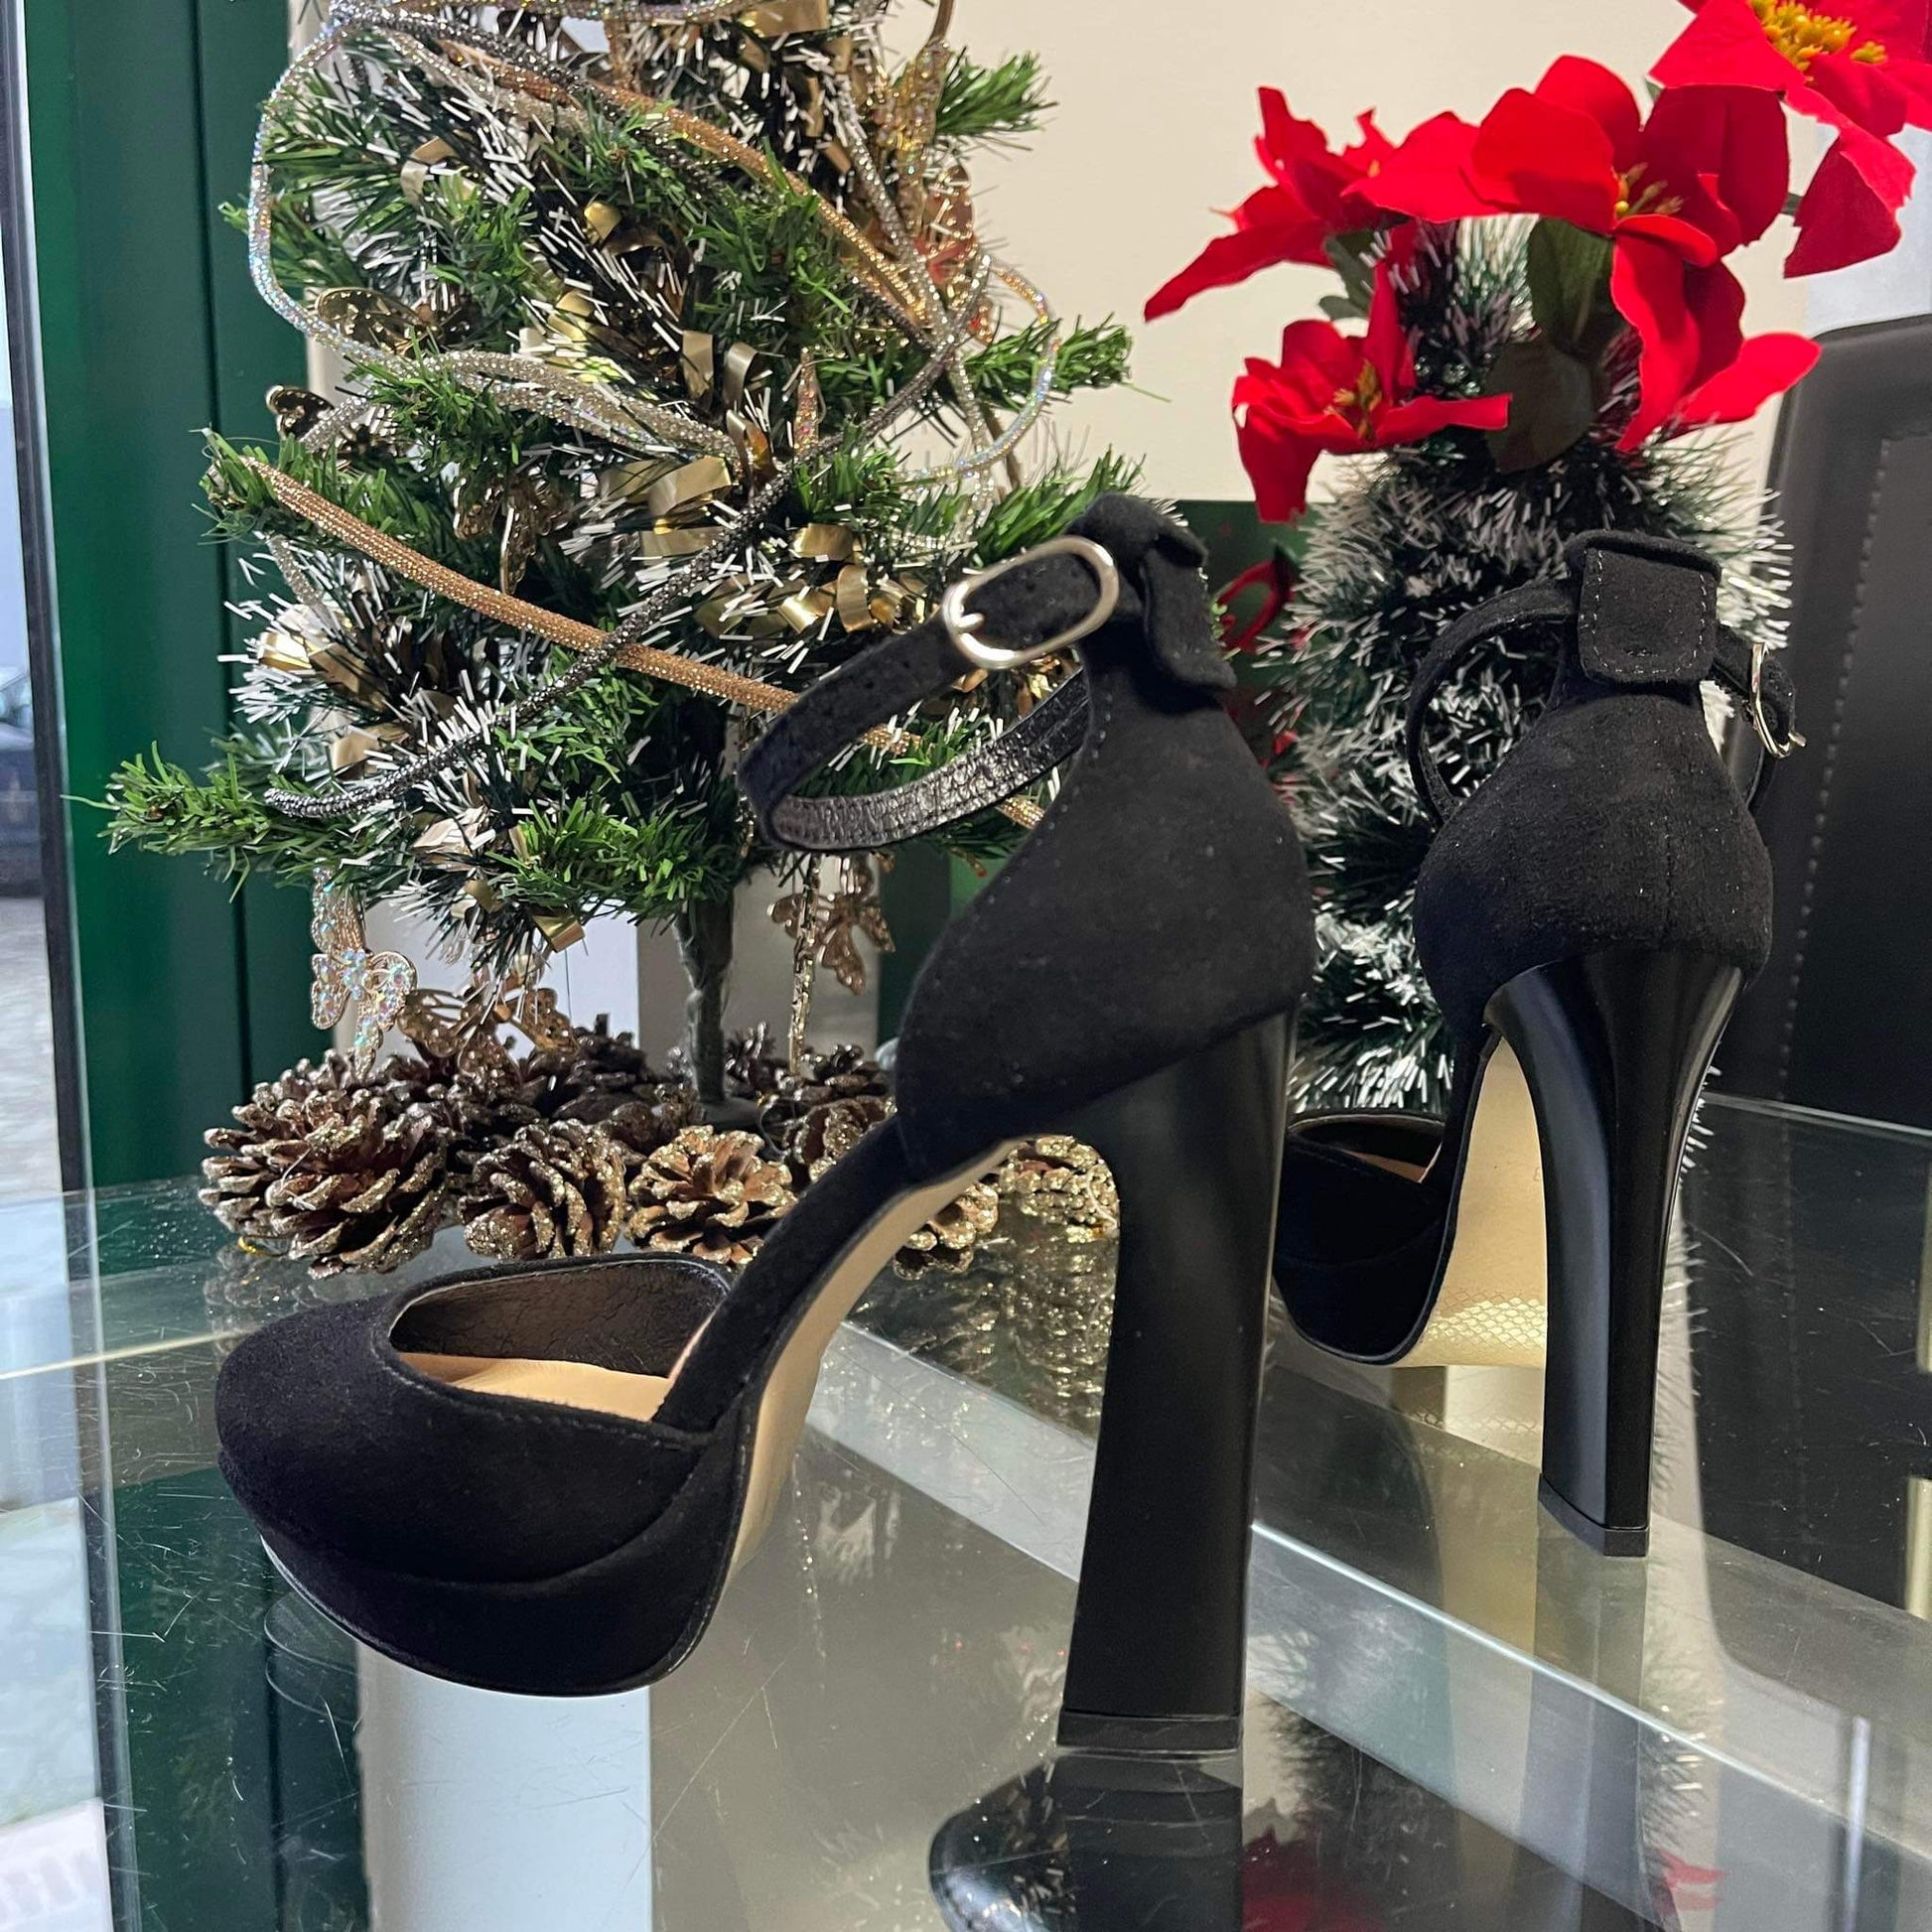 Small size platform heels in black suede